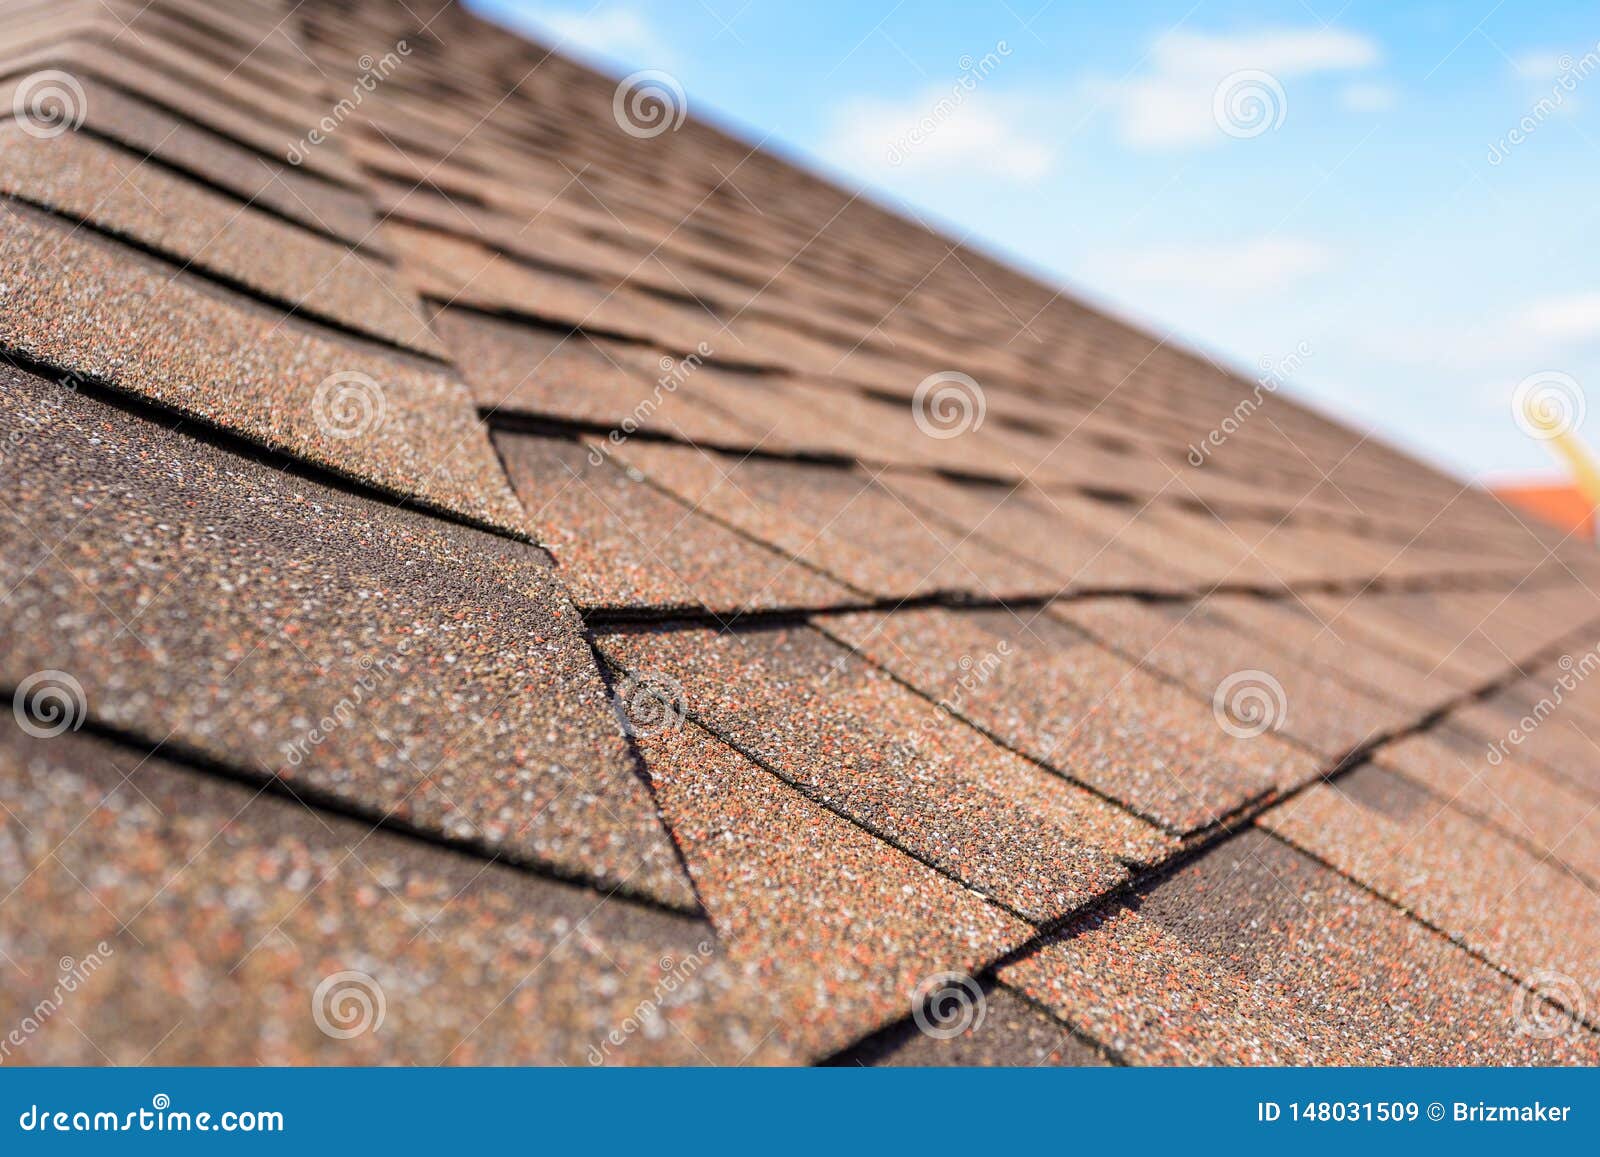 Asphalt Tile Roof on New Home Under Construction Stock Image - Image of